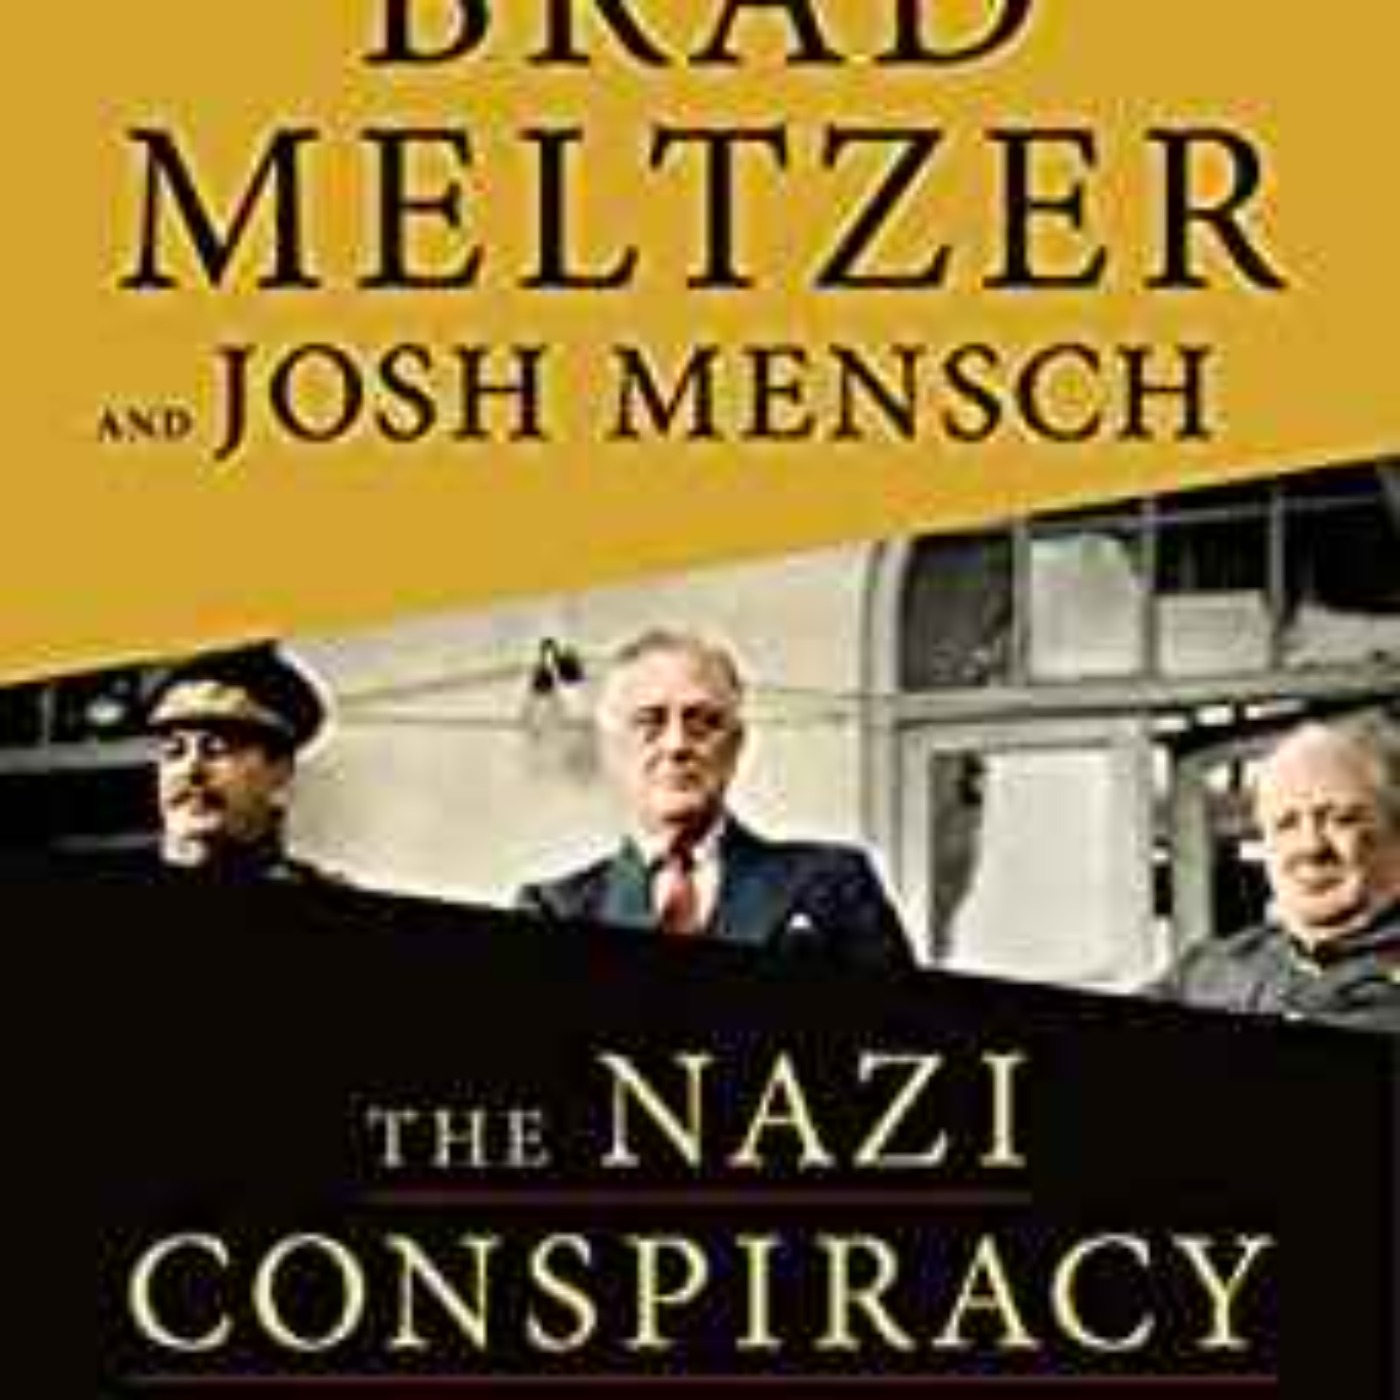 Brad Meltzer - The Nazi Conspiracy